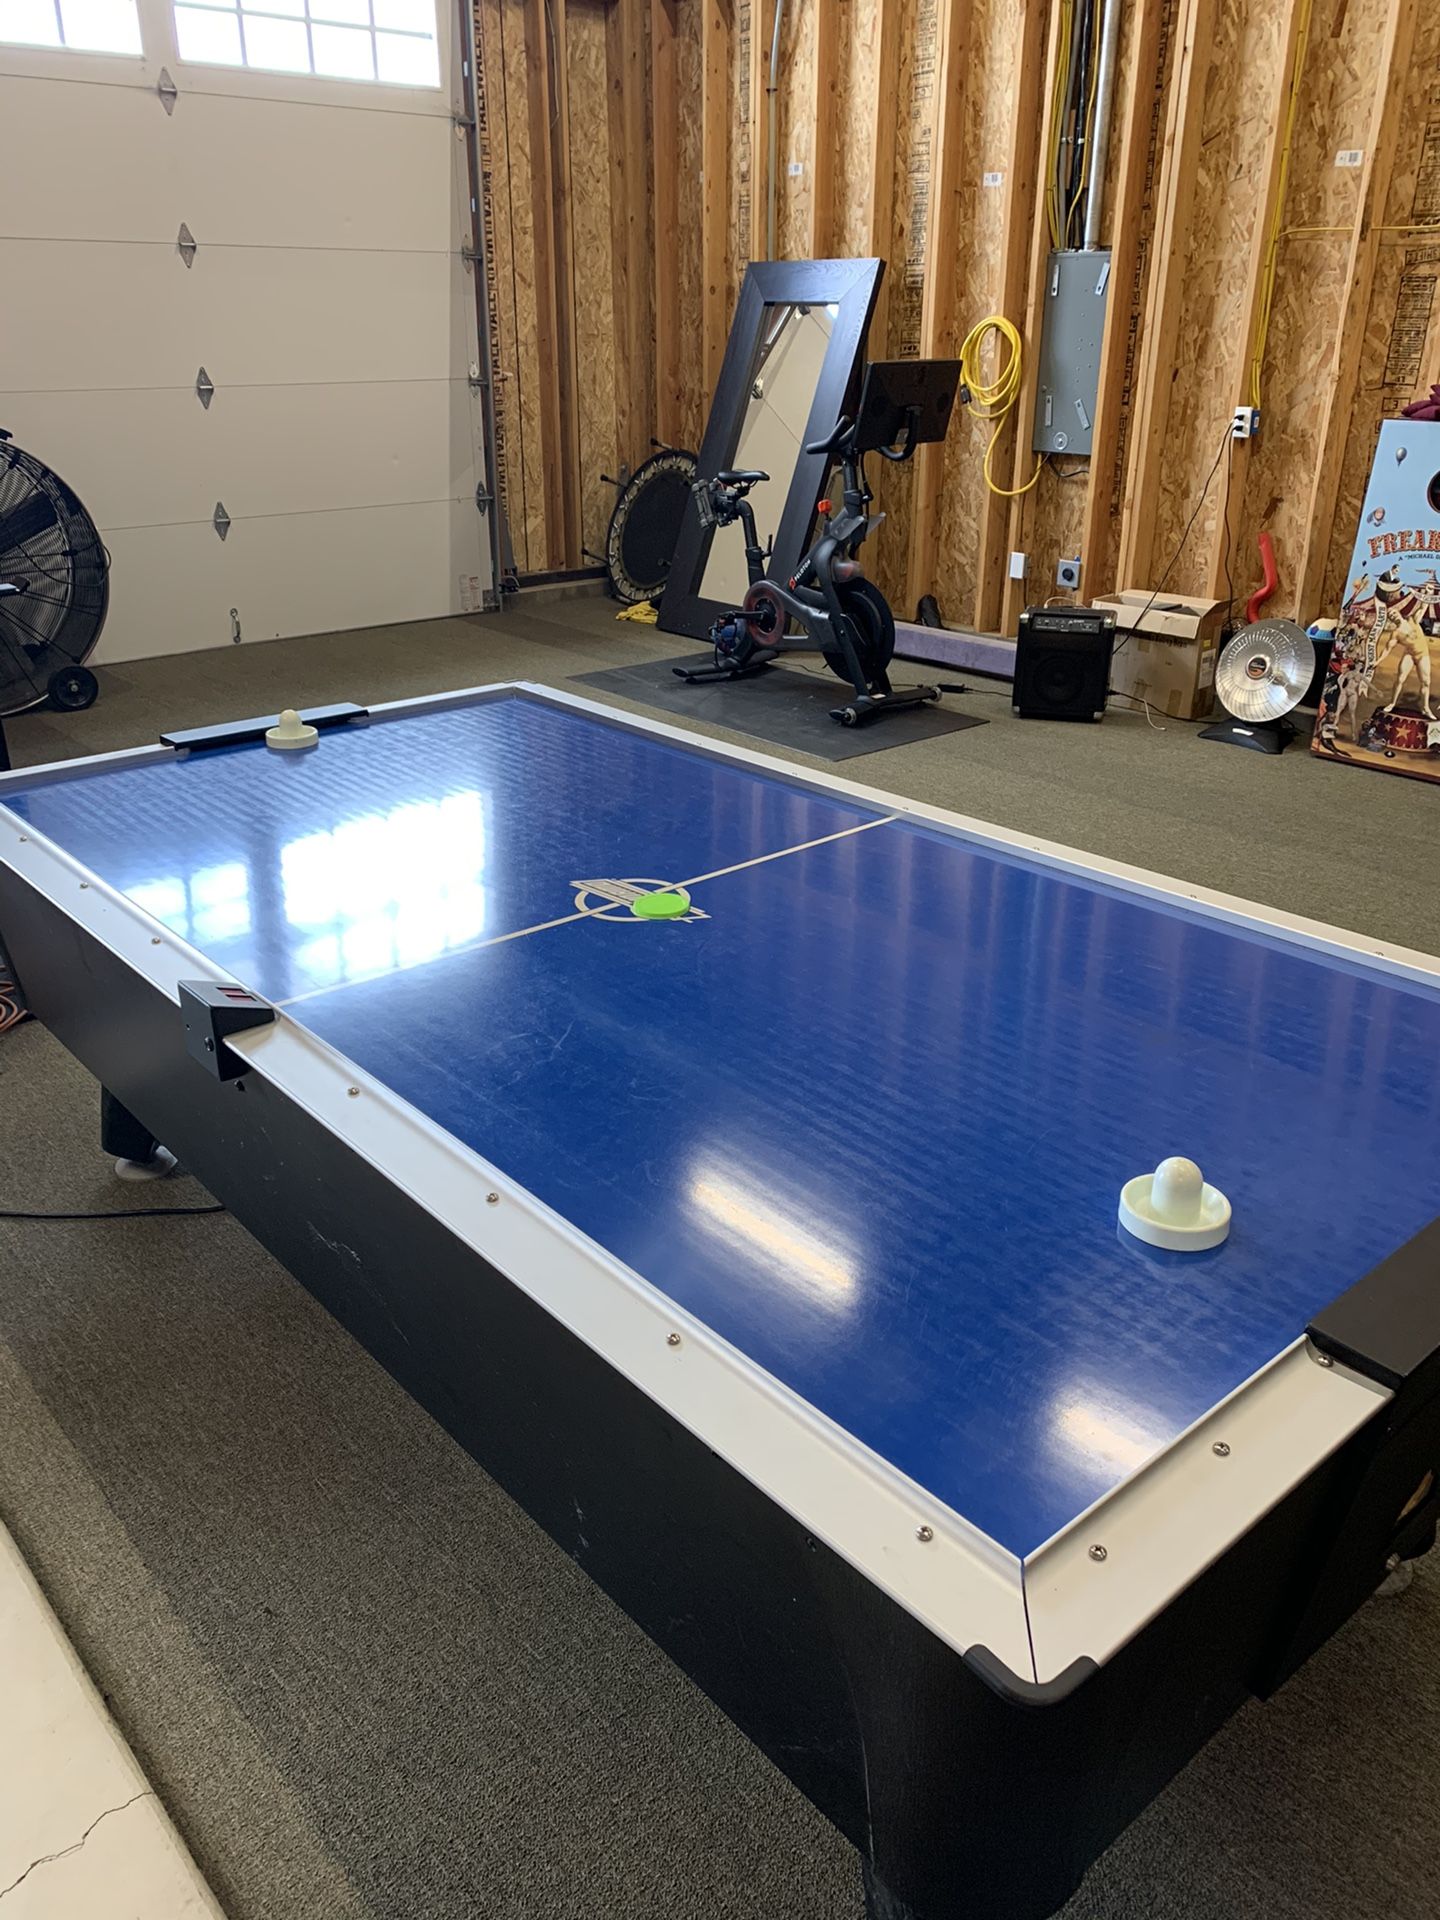 Dynamo arcade air hockey table